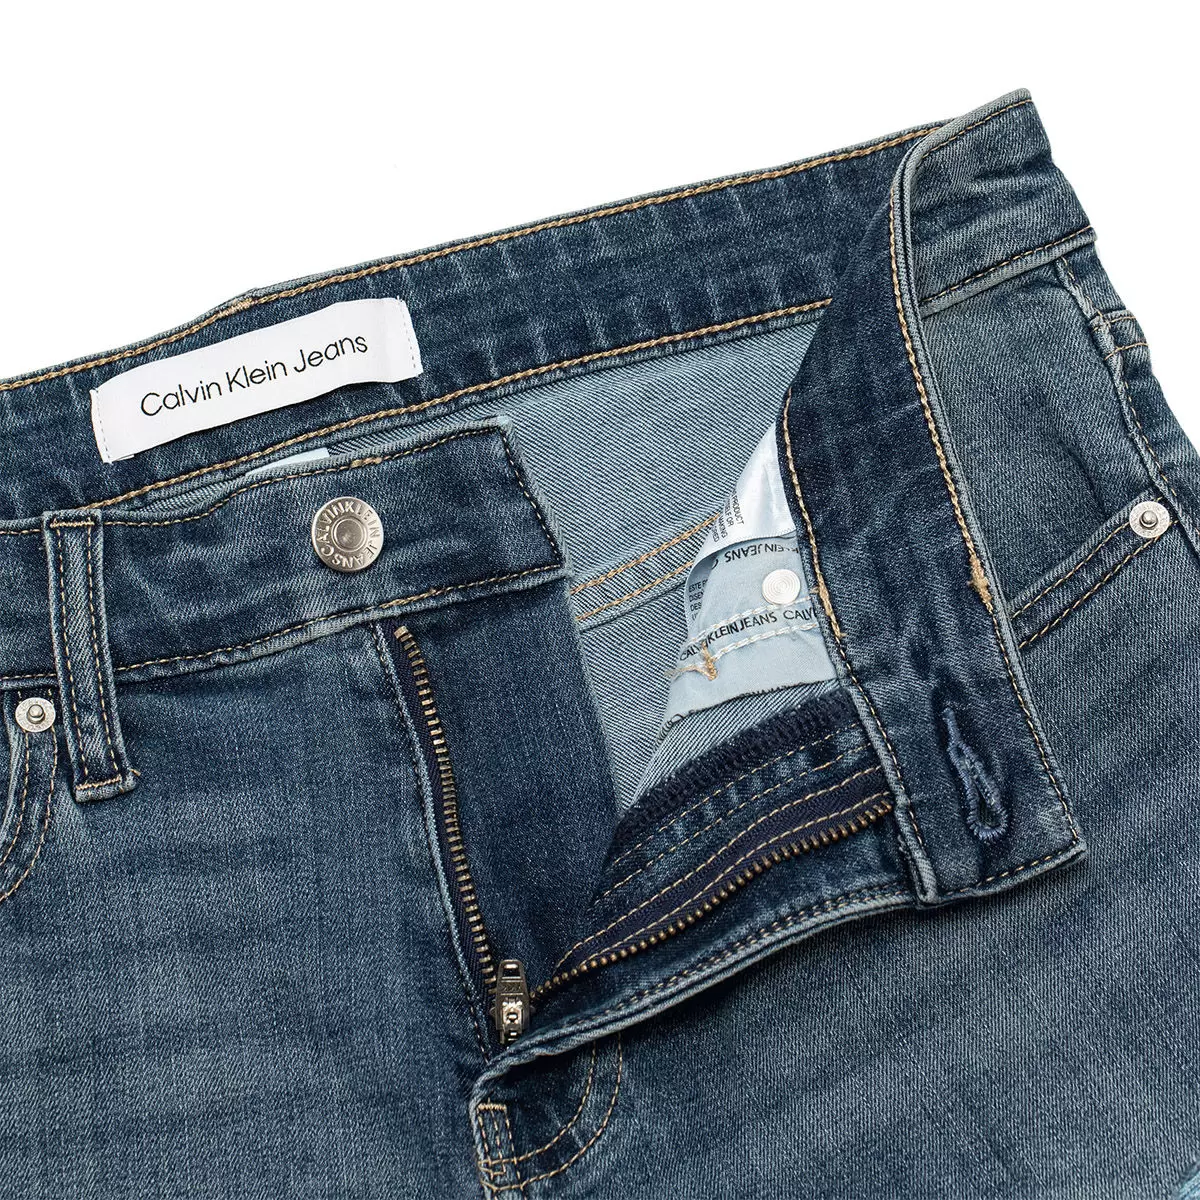 Calvin Klein Jeans 男彈性修身牛仔褲 腰圍 34吋 X 褲長 30吋